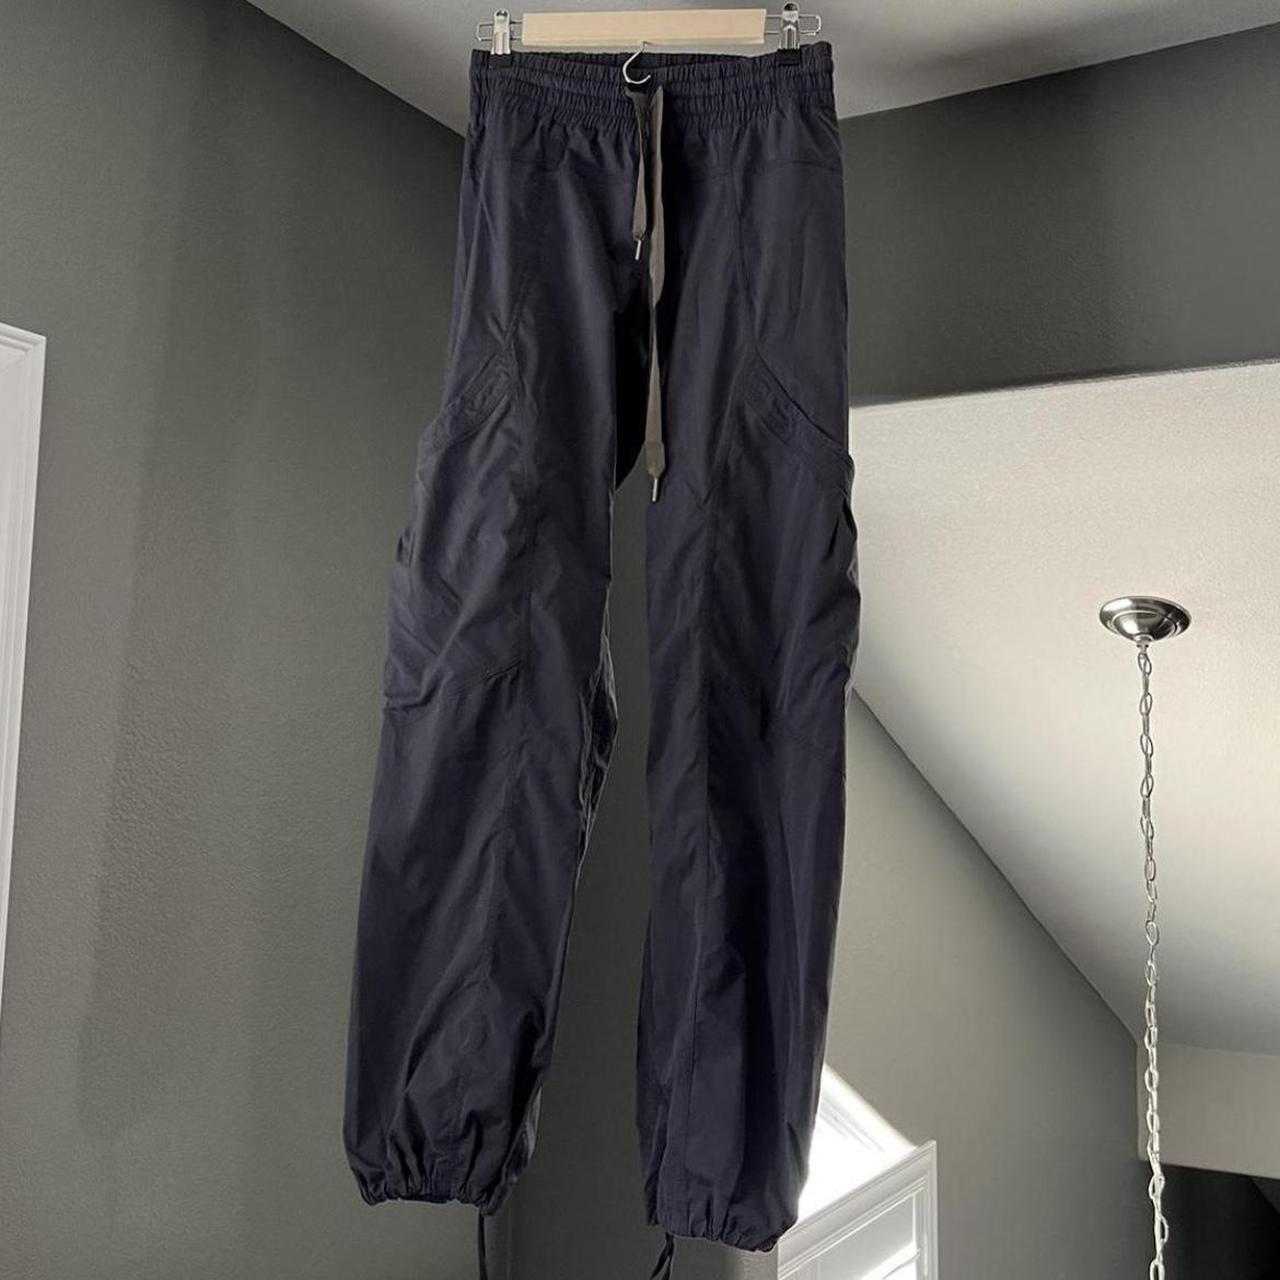 Lulu lemon dance cargo pants. I used these for rock... - Depop